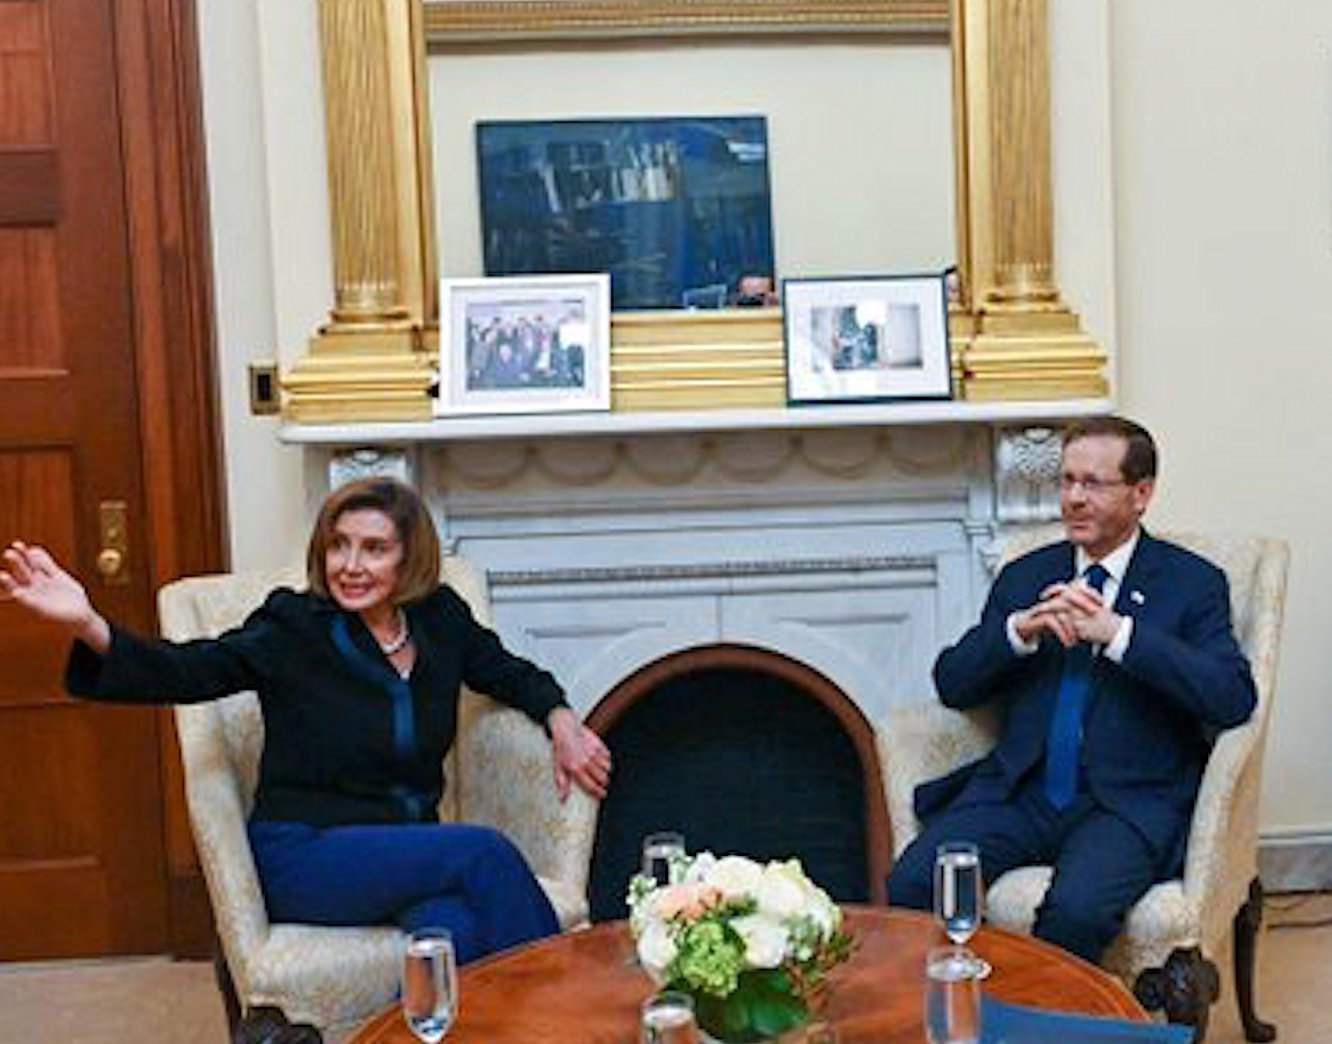 Israeli President Isaac Herzogâs visit to Washingtonâ¦